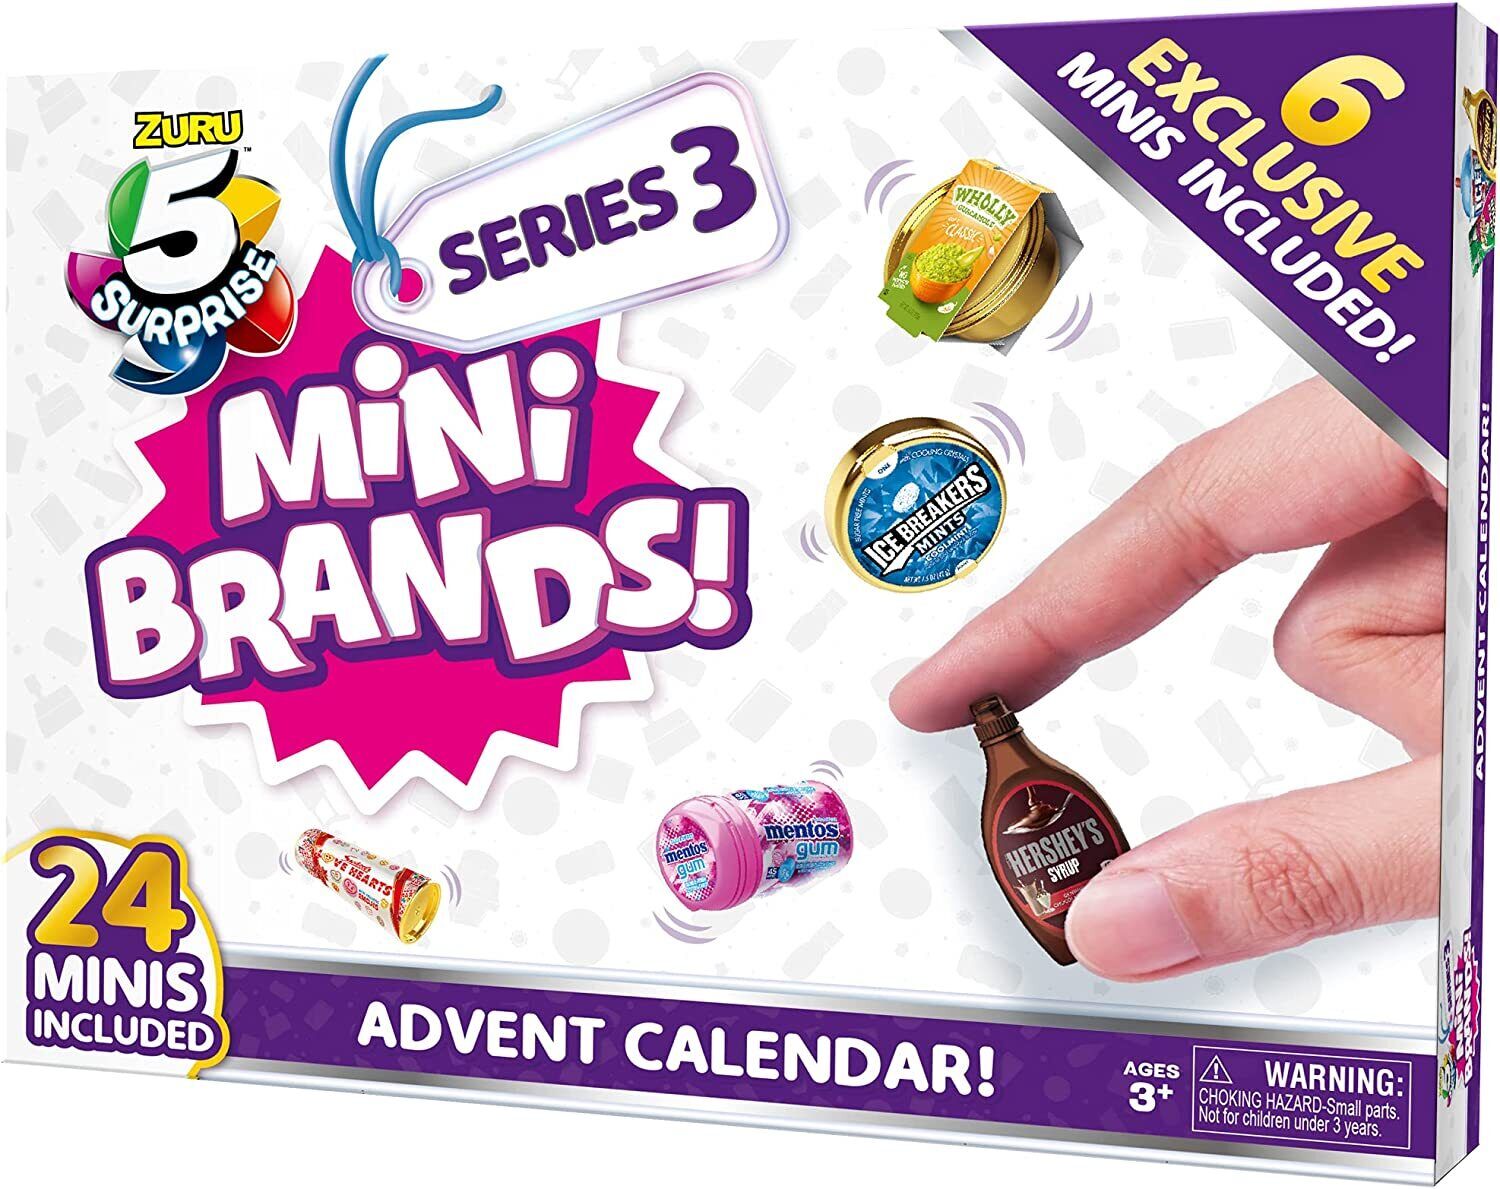 Zuru 5 Surprise Mini Brands Series 3 Advent Calendar, 6 Exclusive Minis Inc